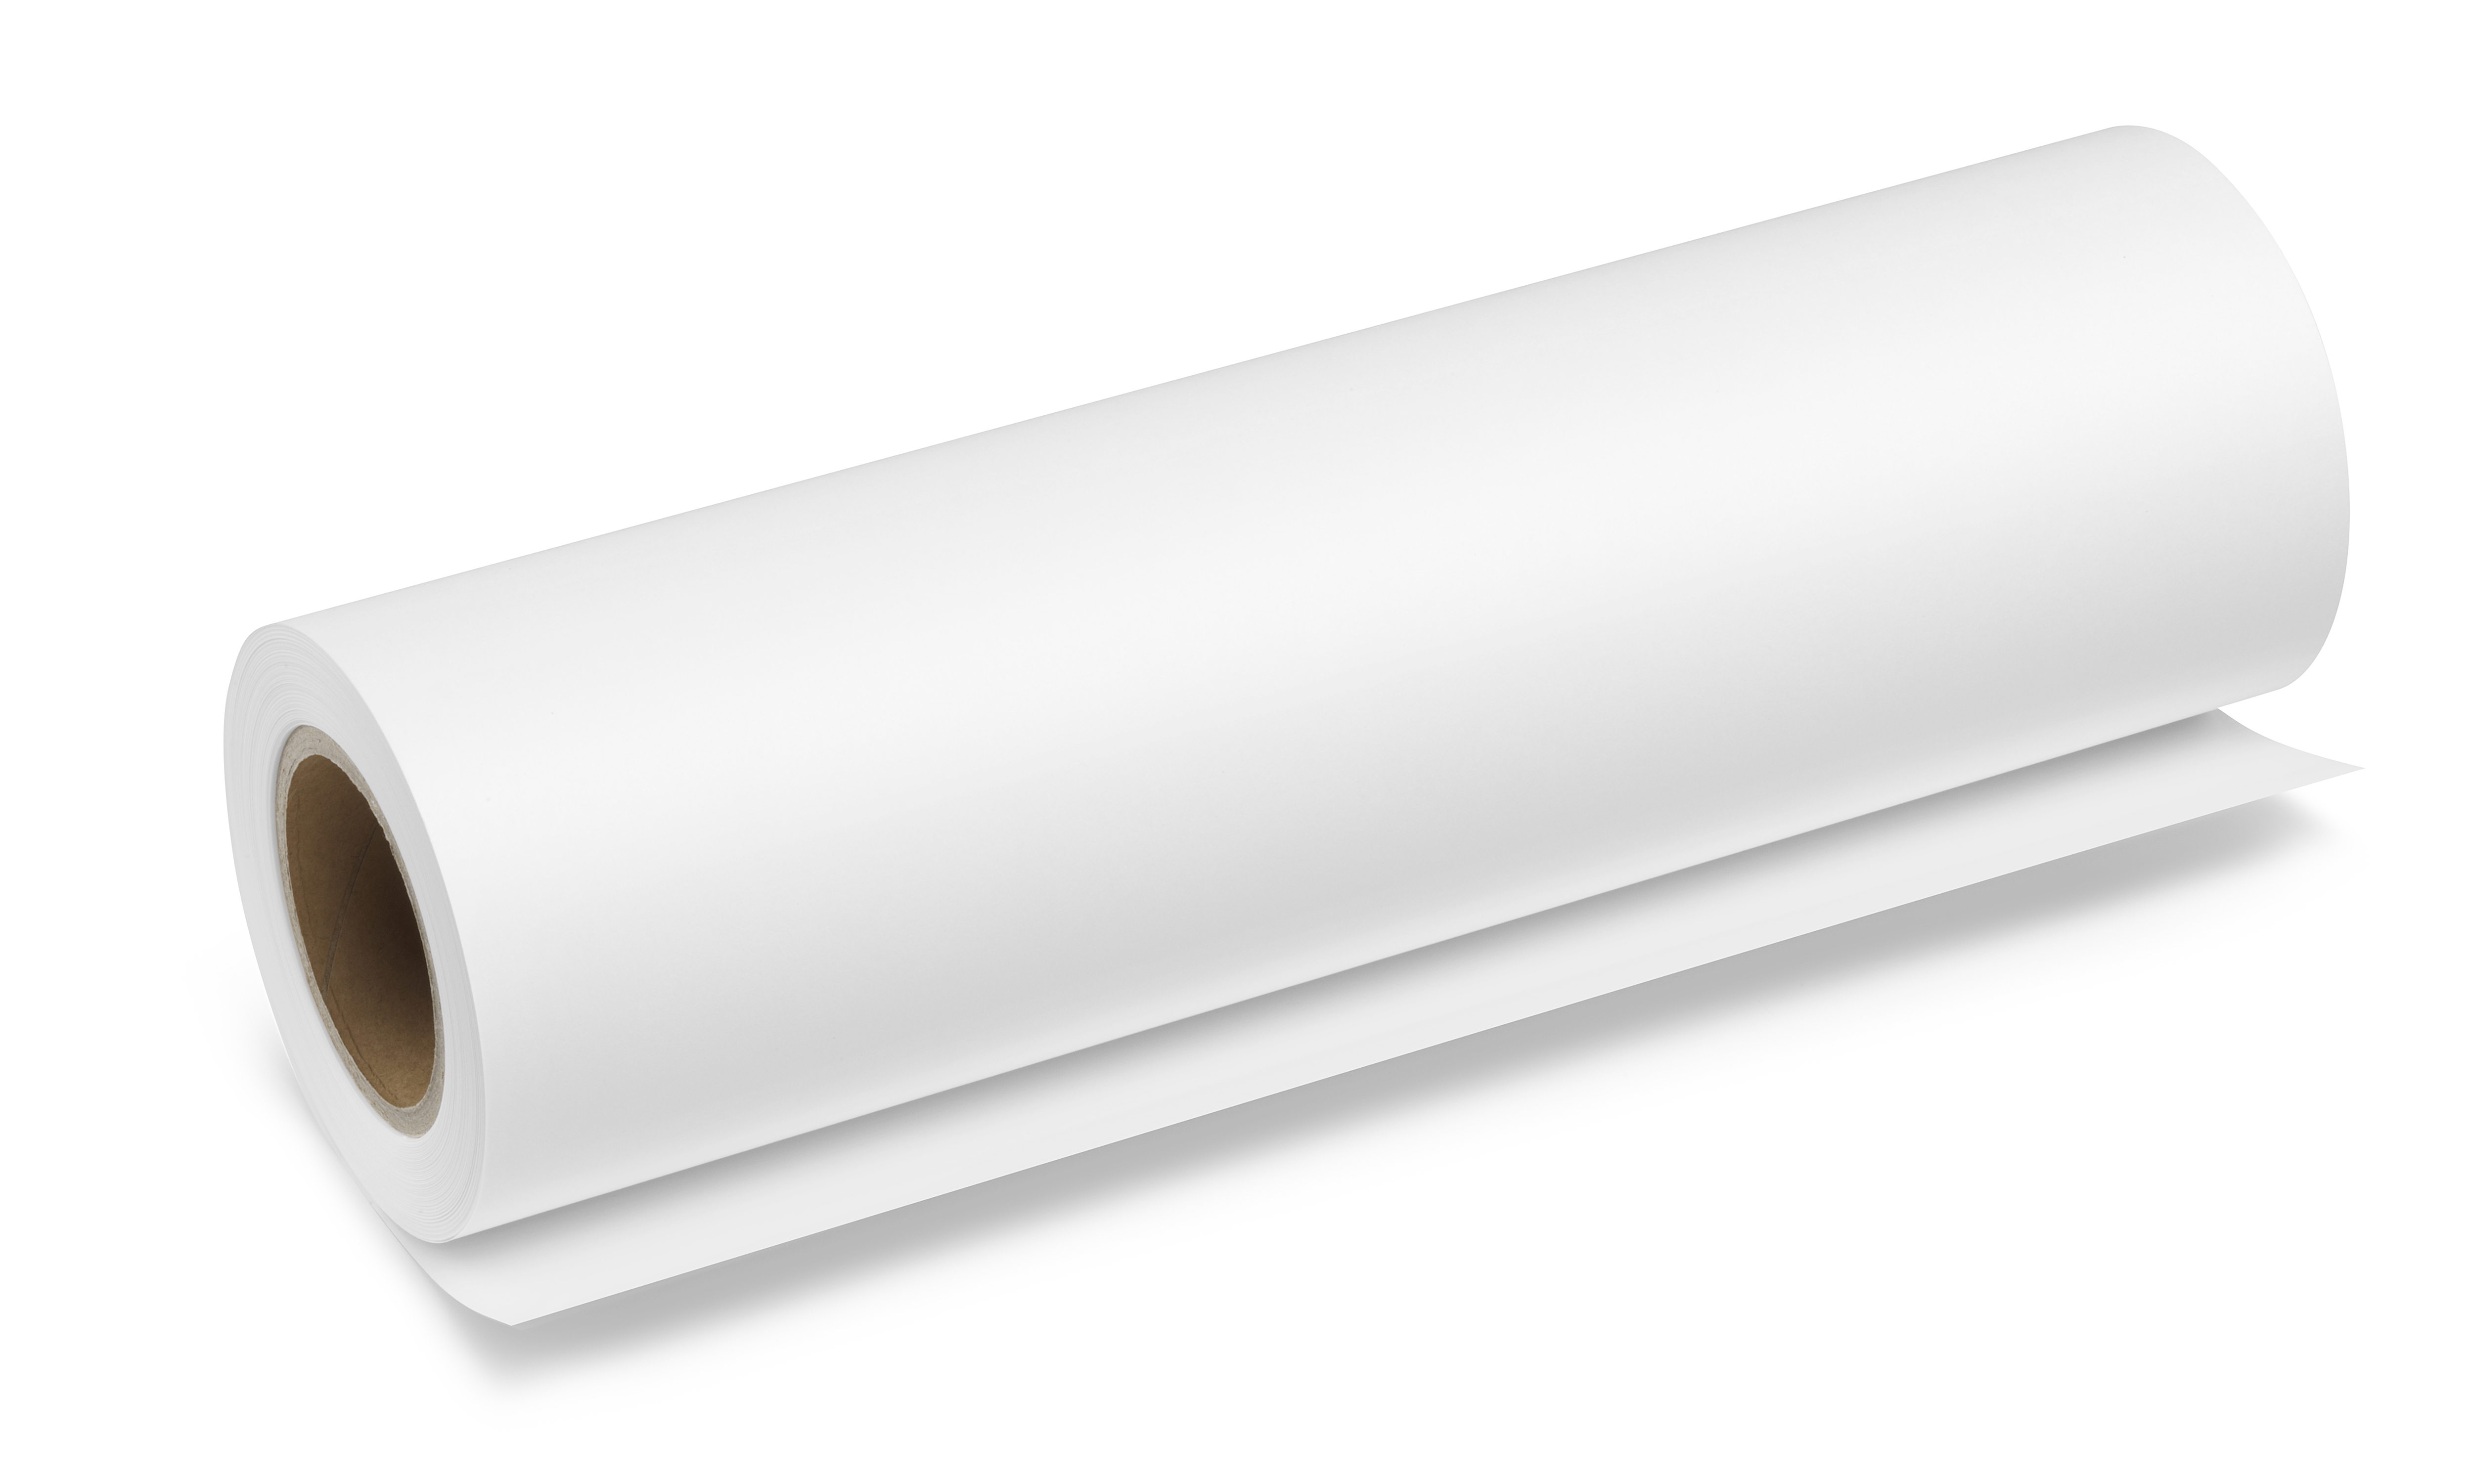 BP80PRA3 plain inkjet roll paper facing right